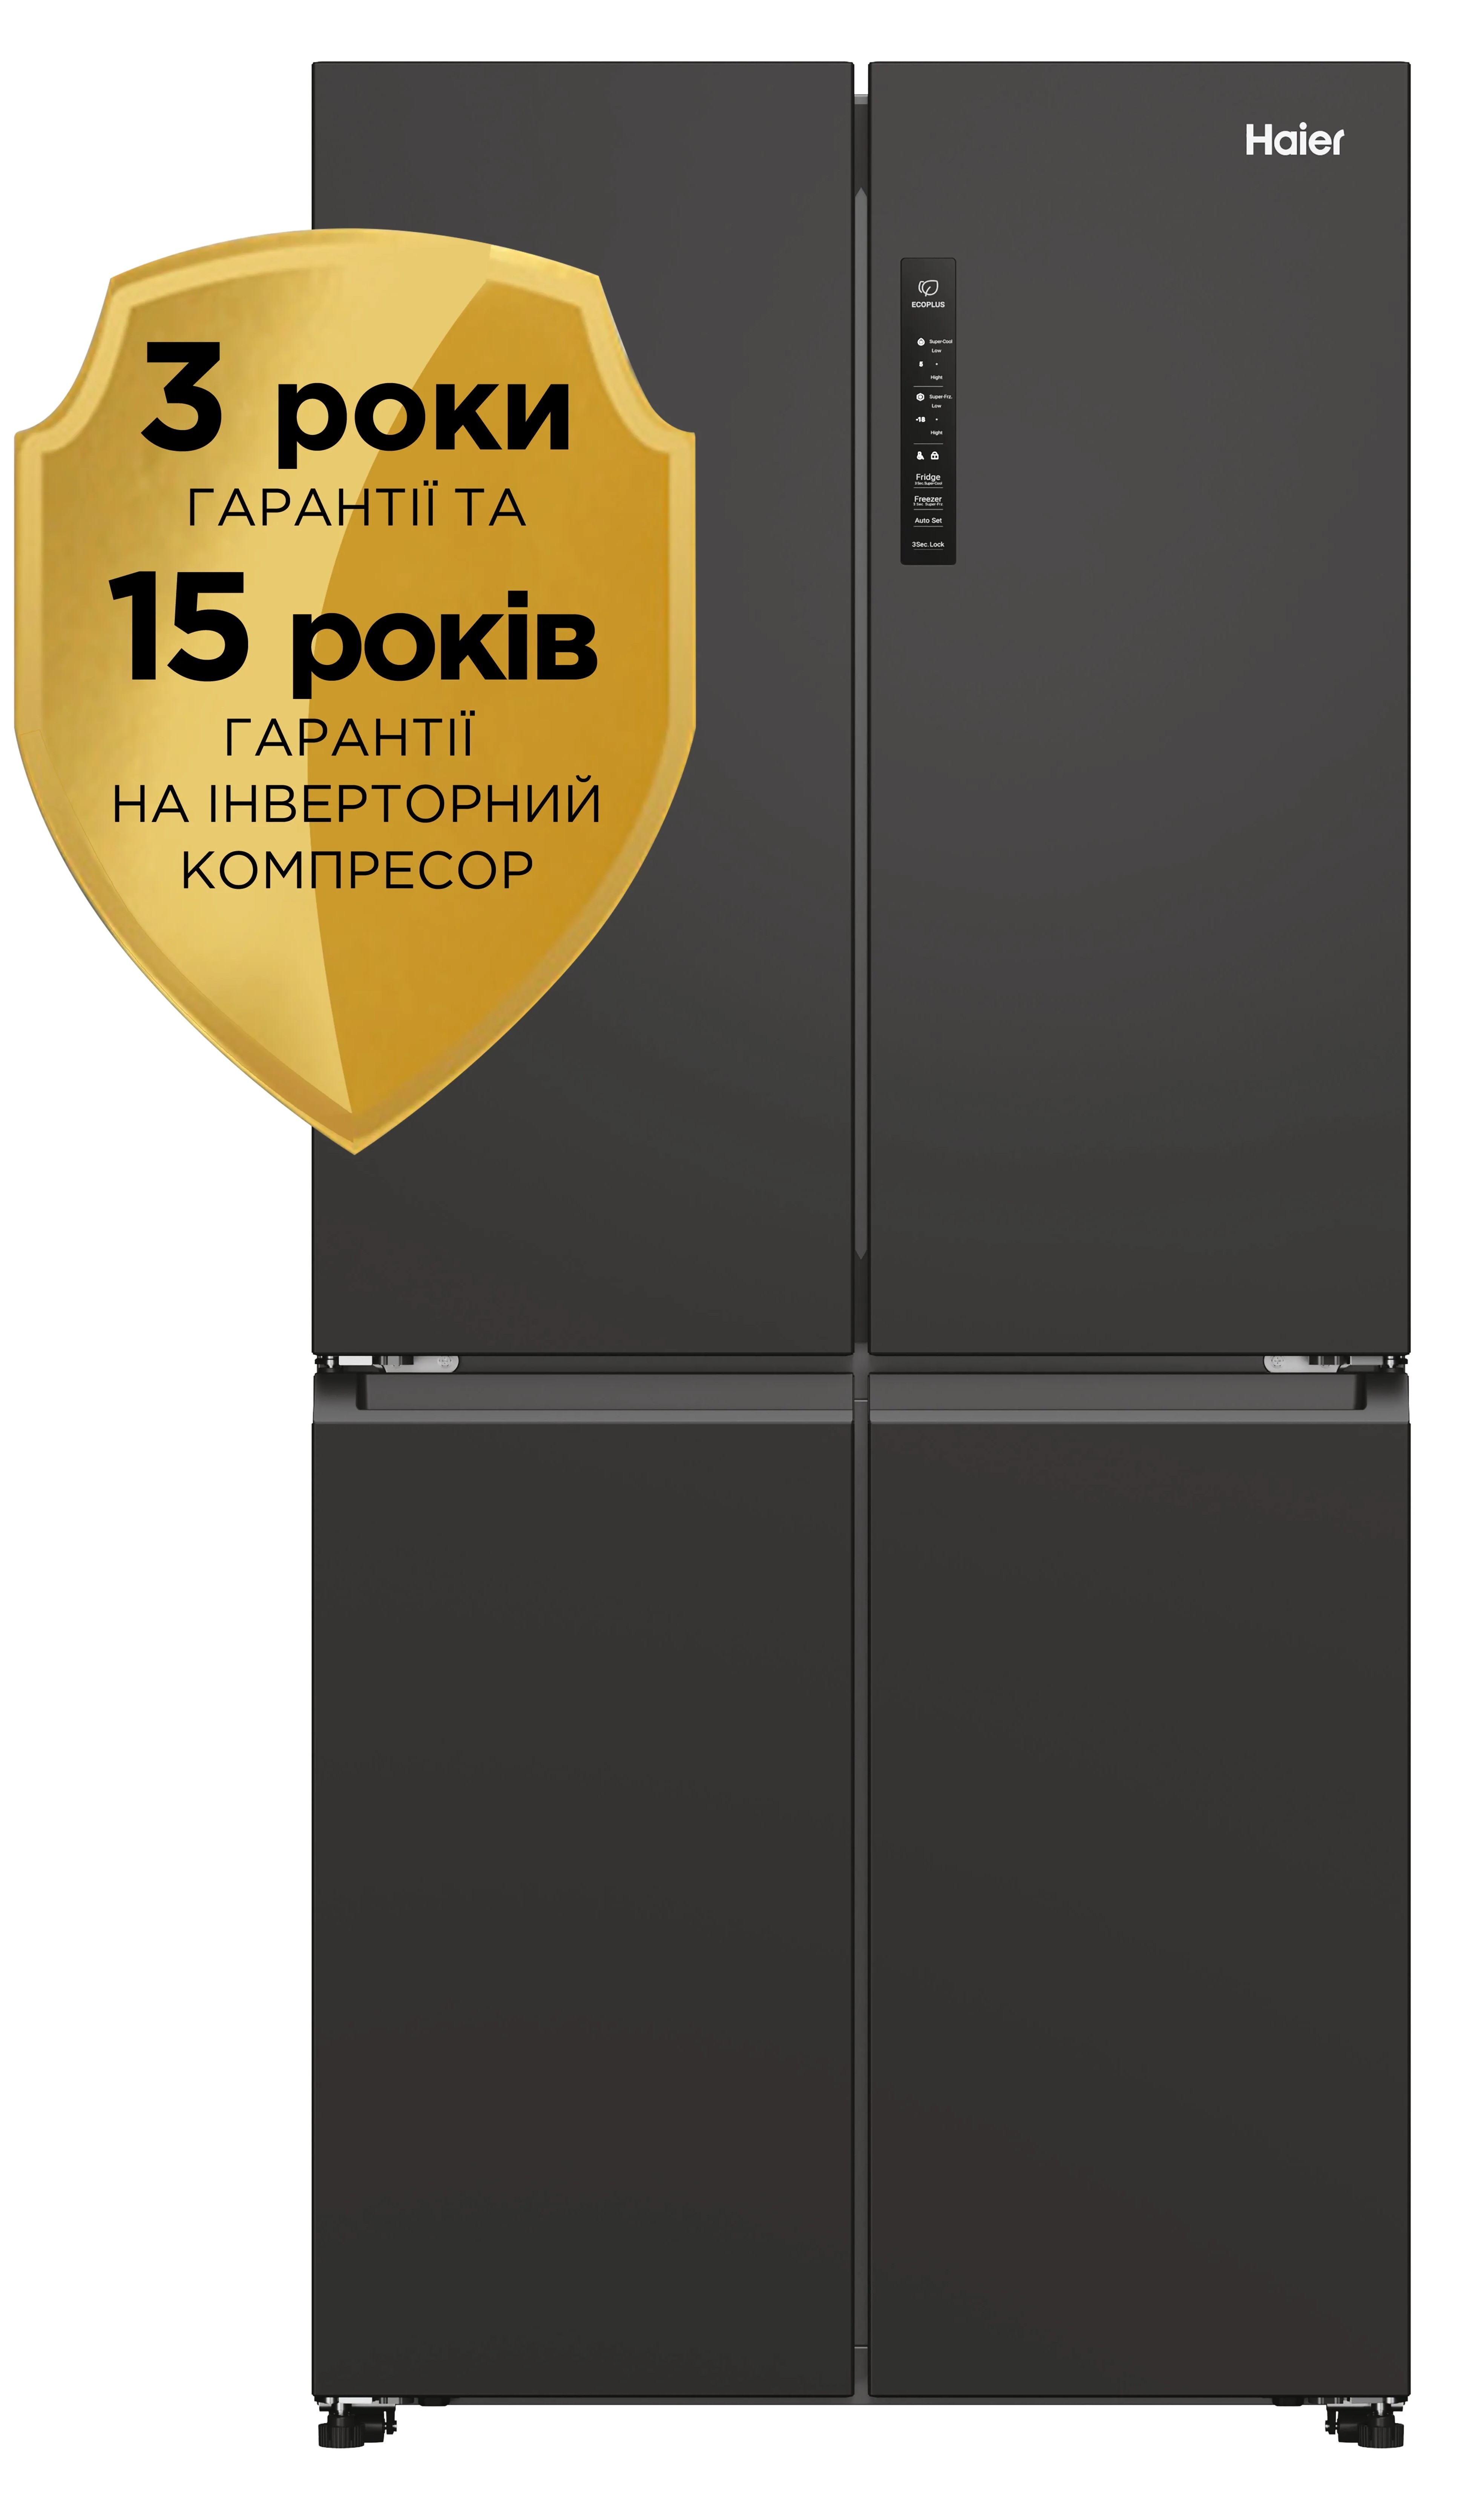 Холодильник Haier HCR3818ENPT цена 32999.00 грн - фотография 2